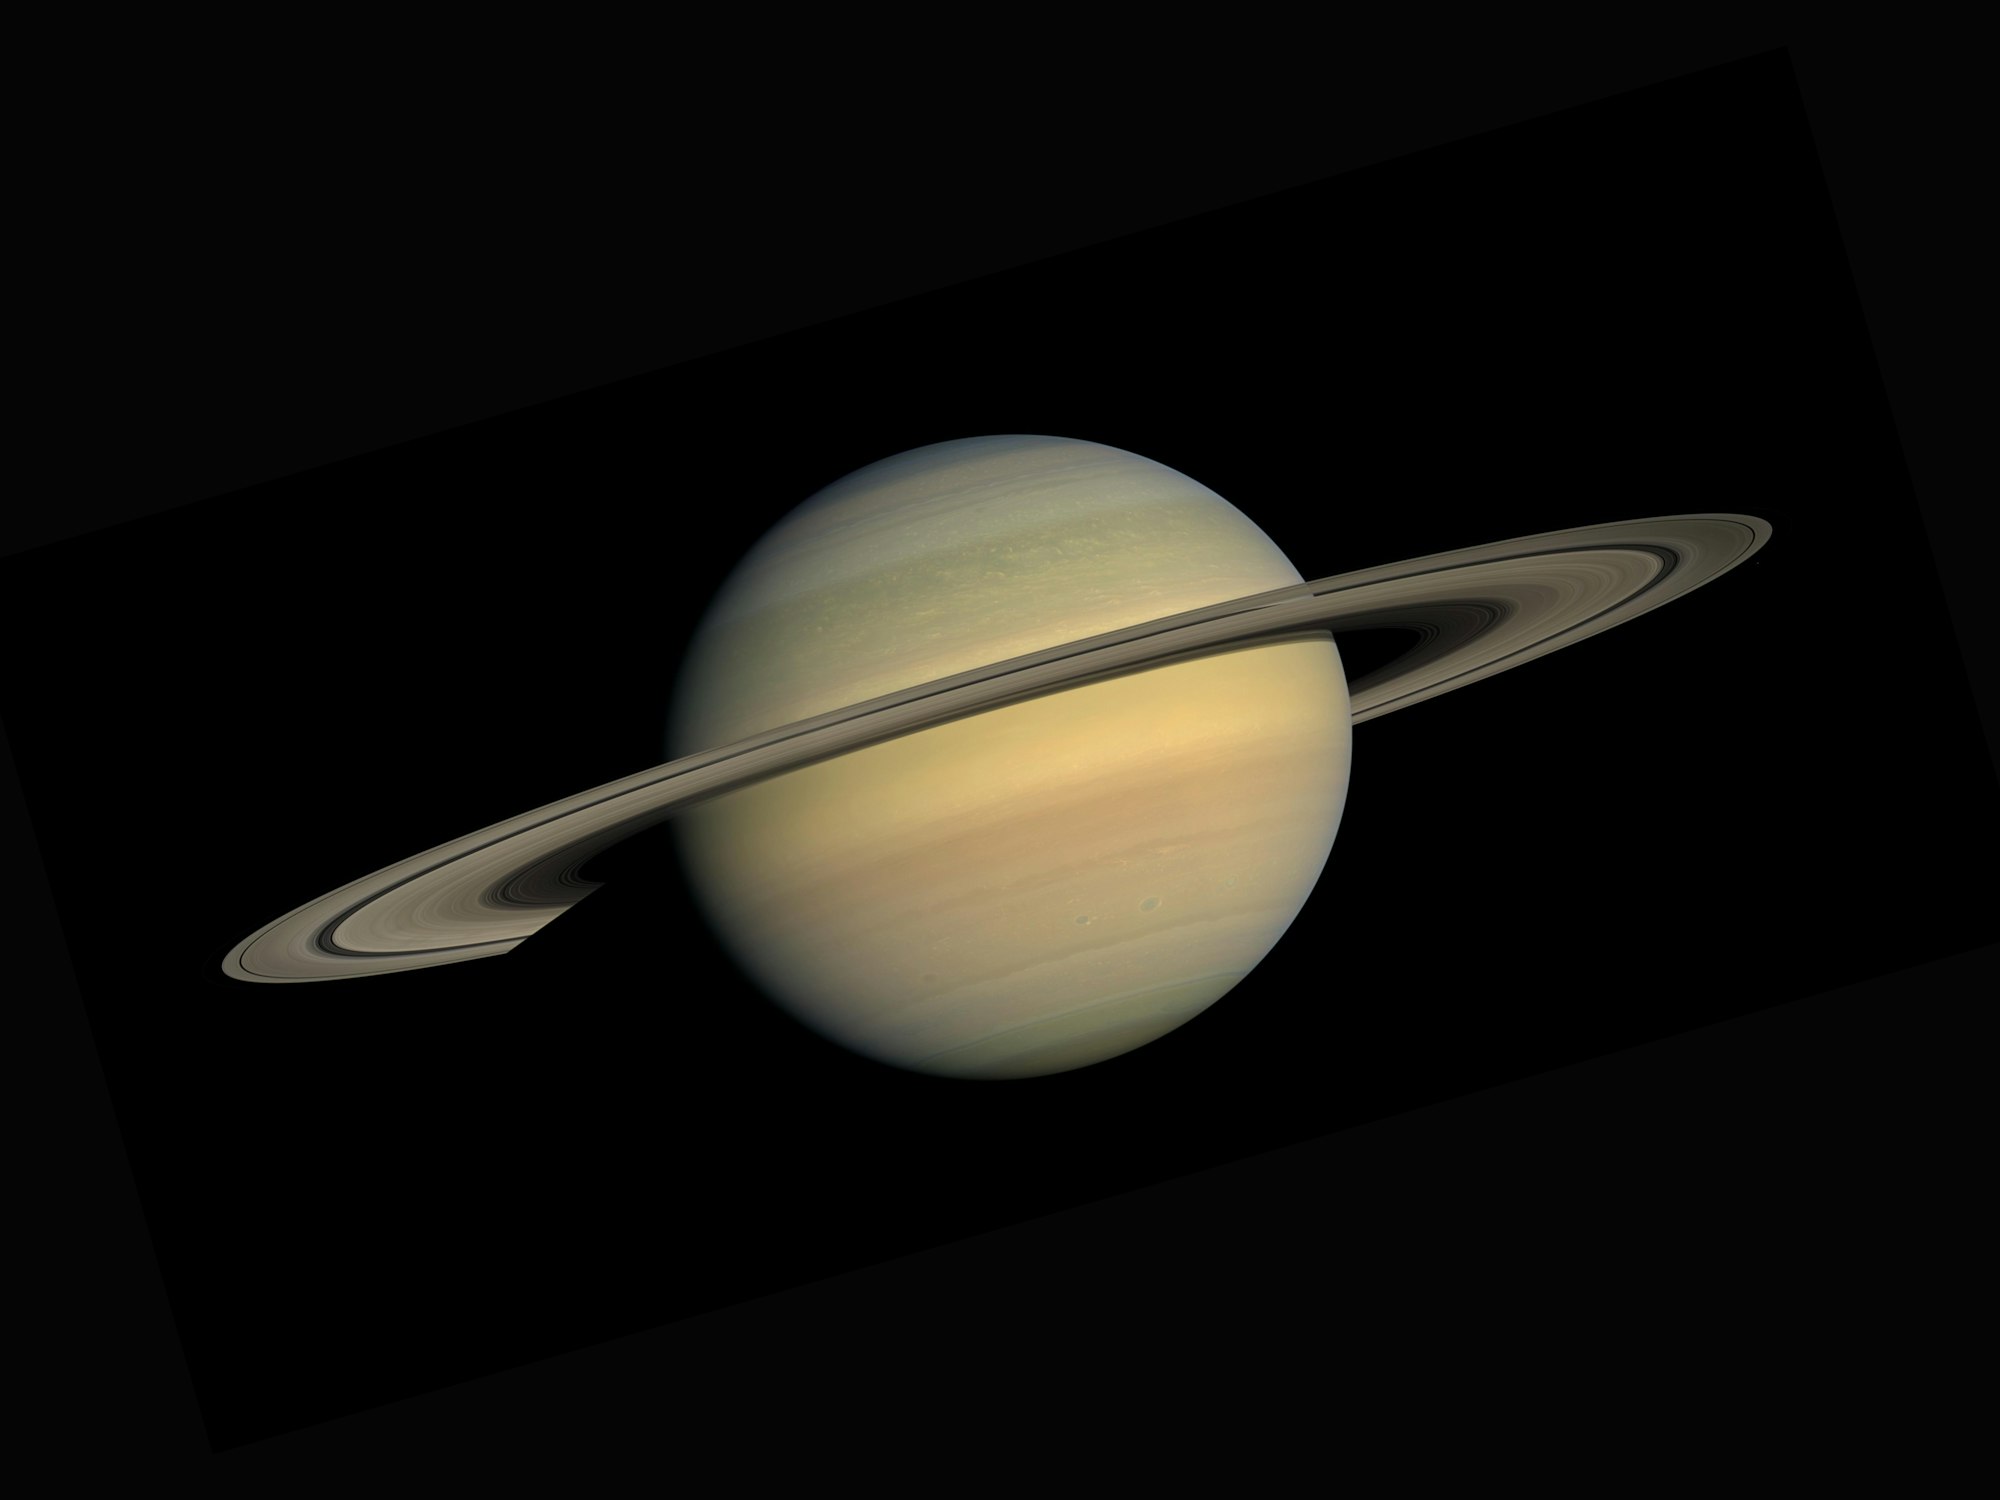 Saturday: Day of Saturn